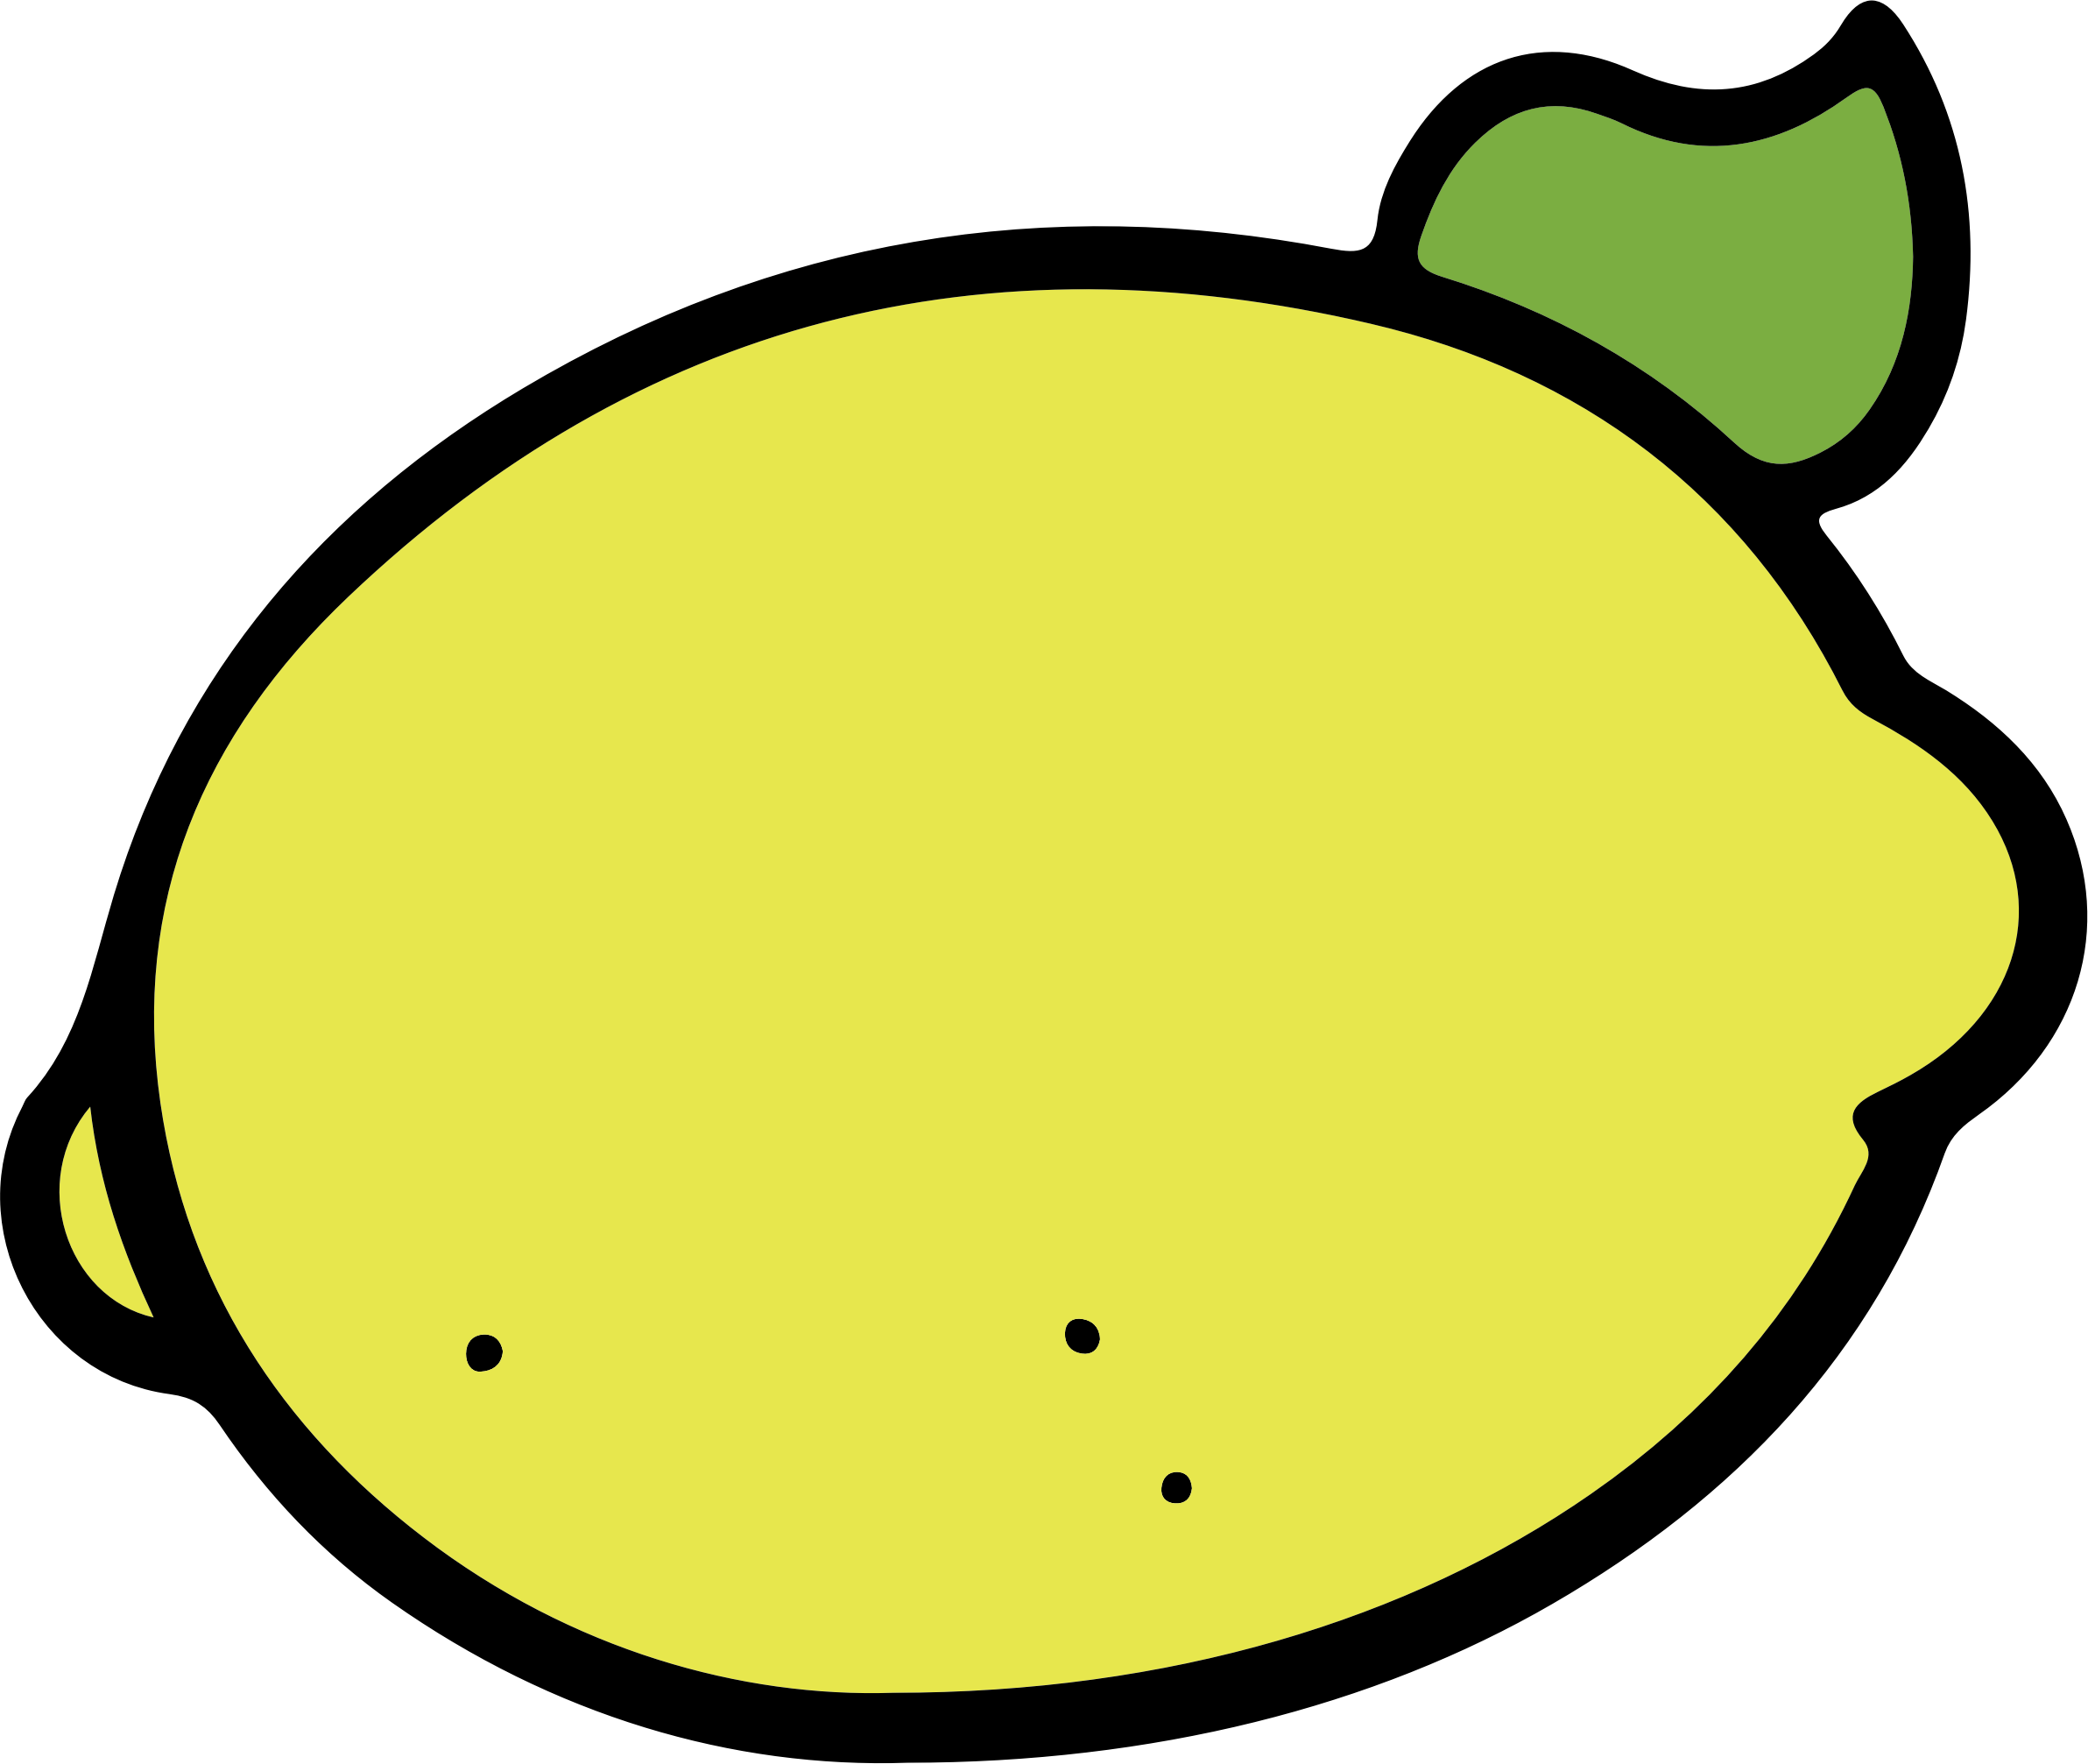 Lemon clip art to download